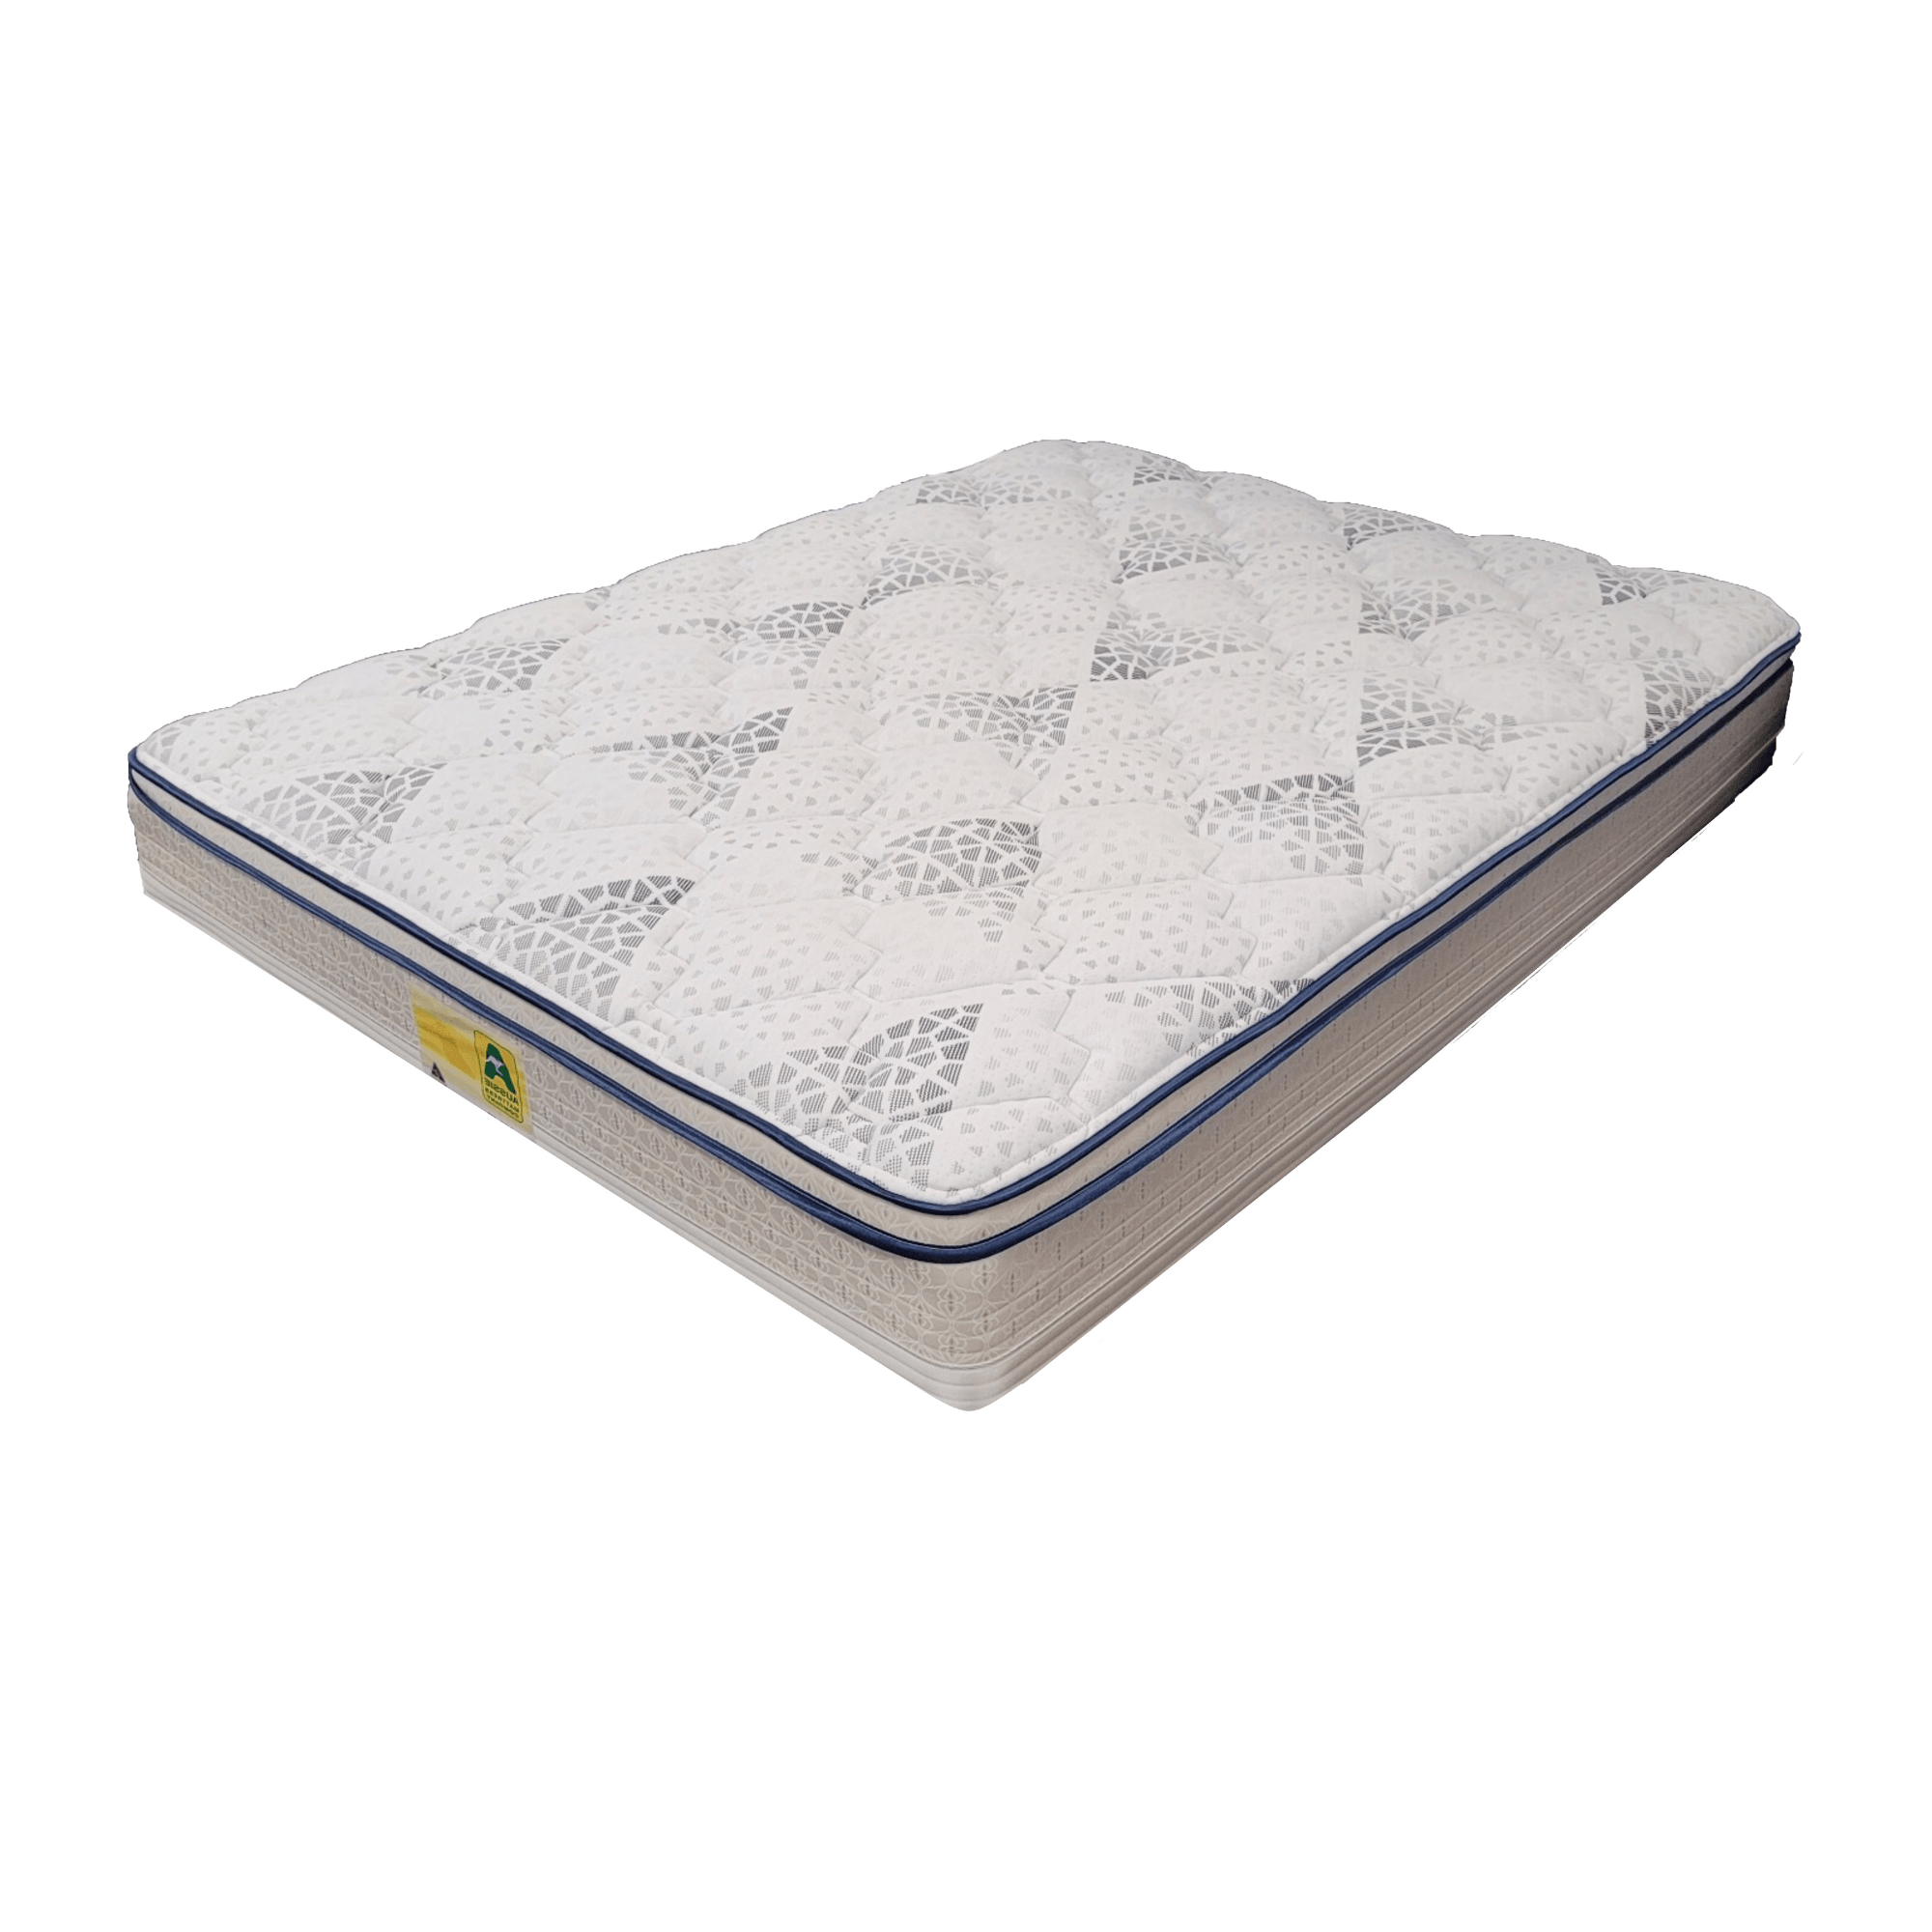 SleepMaker Kingfisher Mattress - Premium Queen and King Size Pocket Spring Luxury for Ultimate Comfort